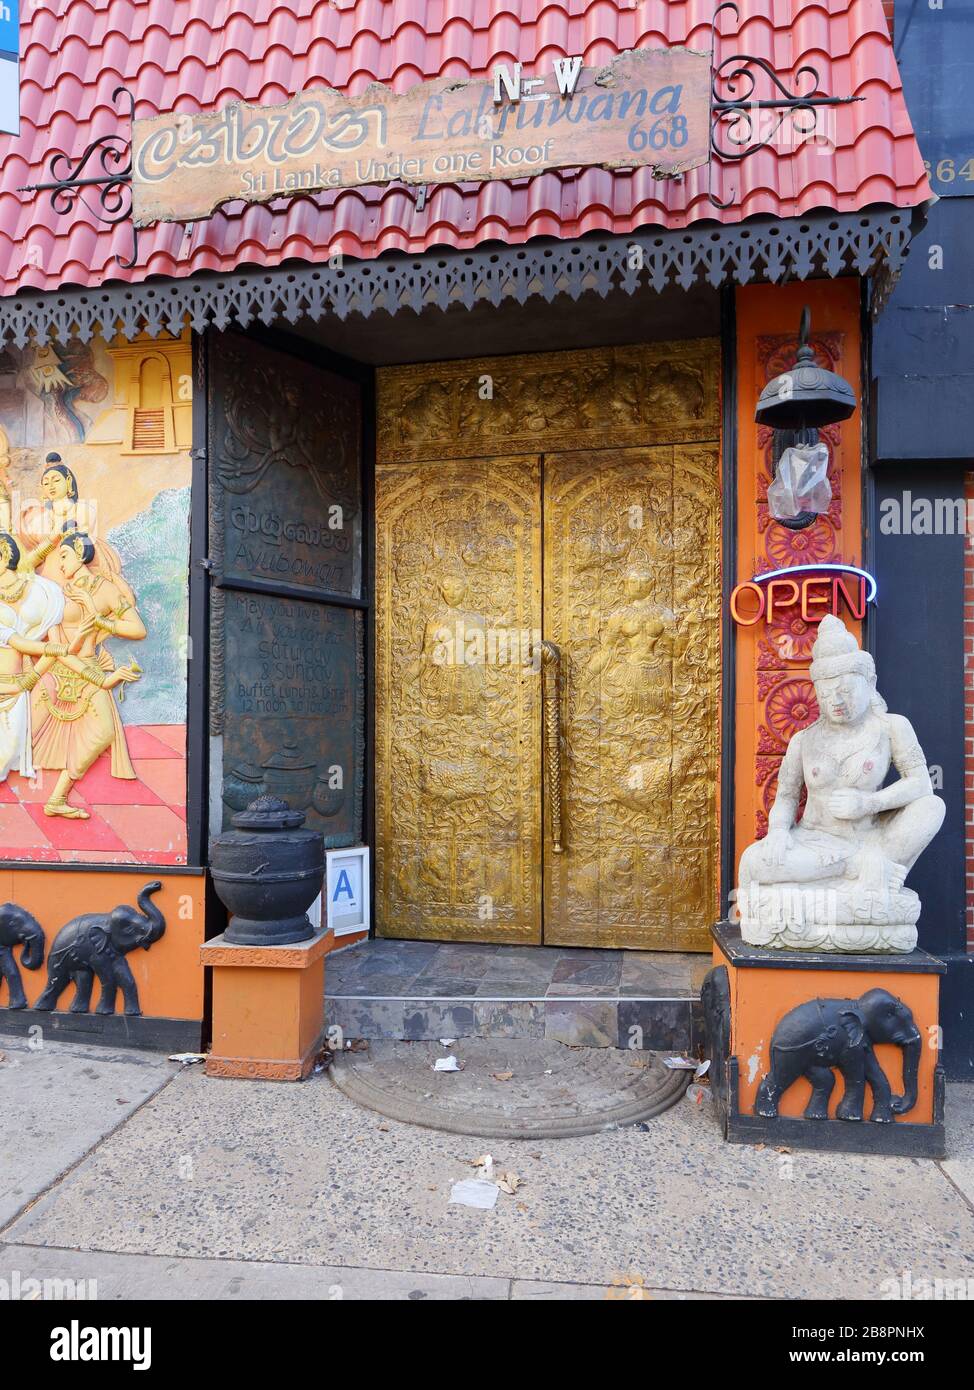 Lakruwana, 668 Bay St, Staten Island, New York. NYC storefront photo of a Sri Lankan buffet restaurant in Stapleton. Stock Photo